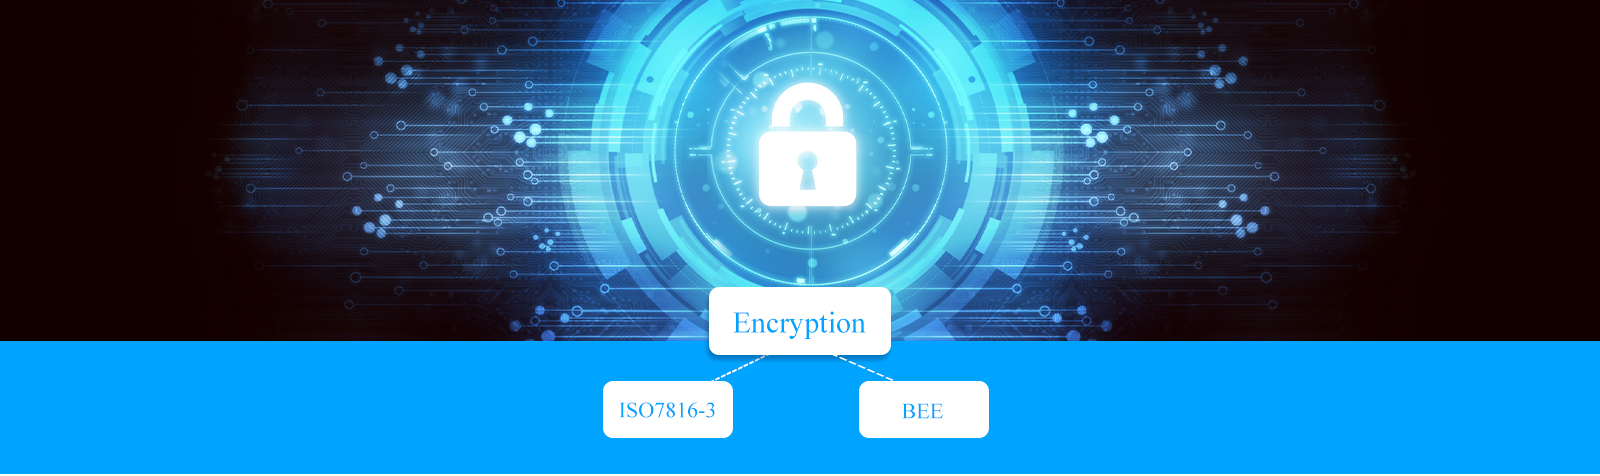 Native data encryption